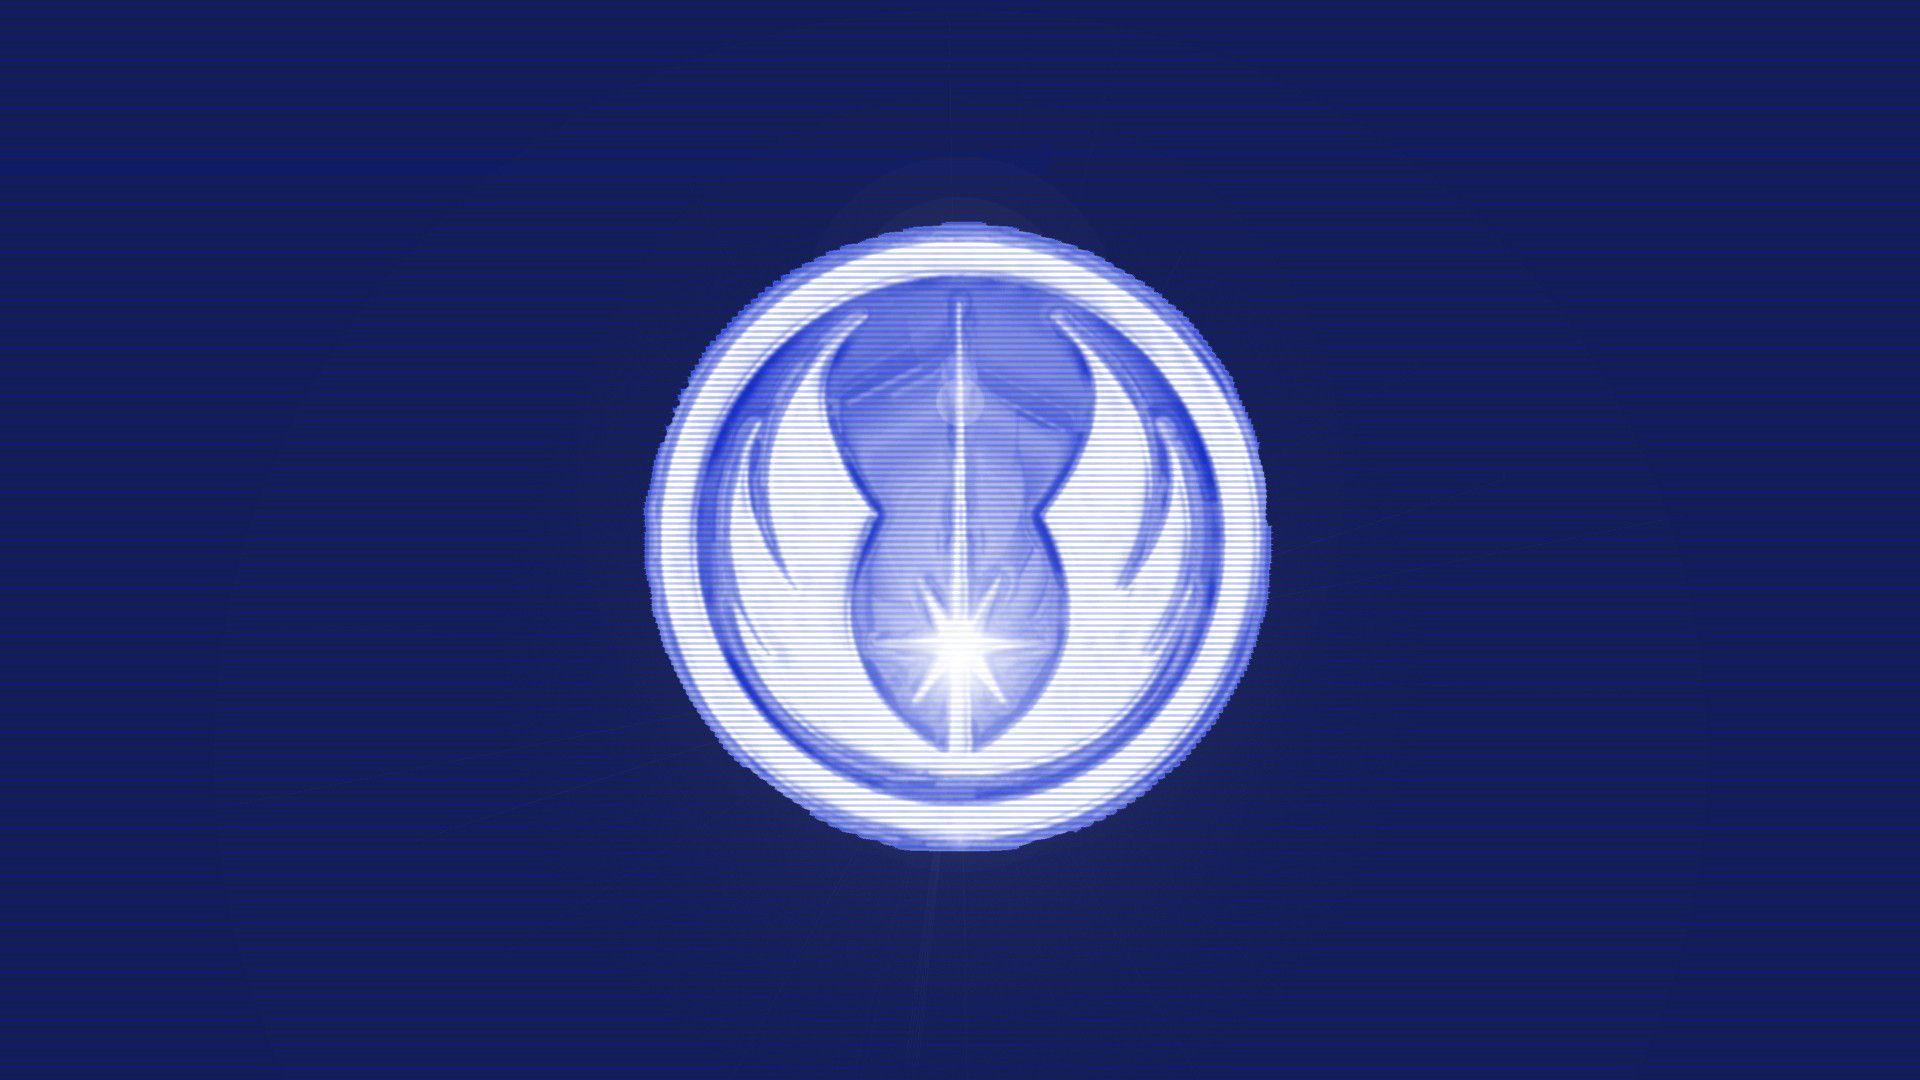 star wars jedi logo wallpaper